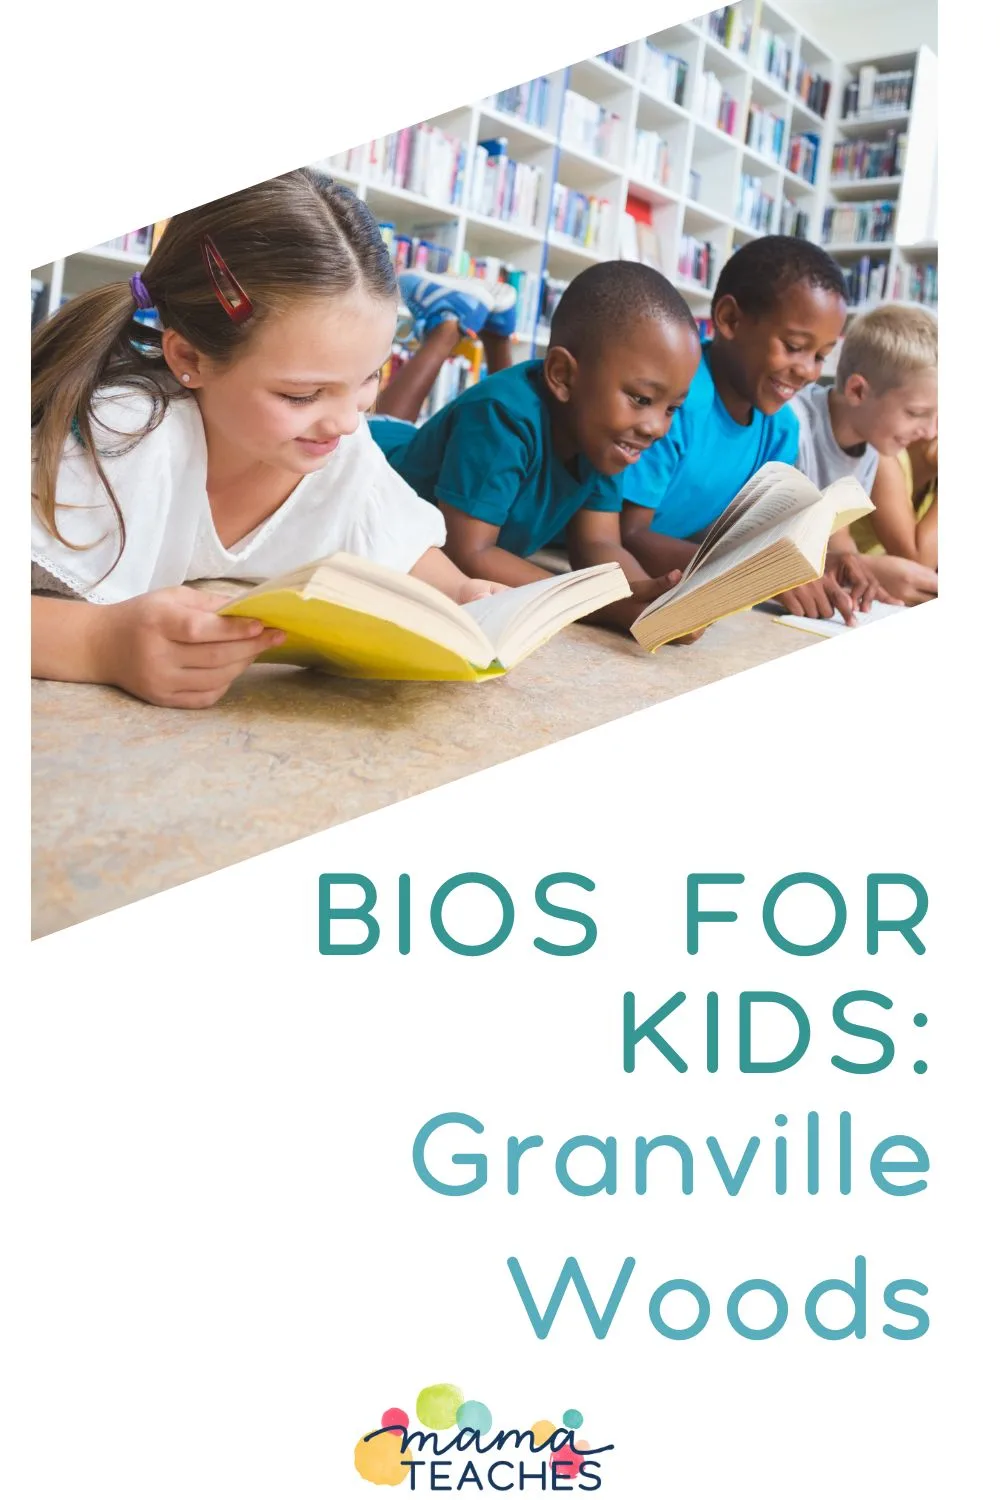 Bios for Kids Granville Woods